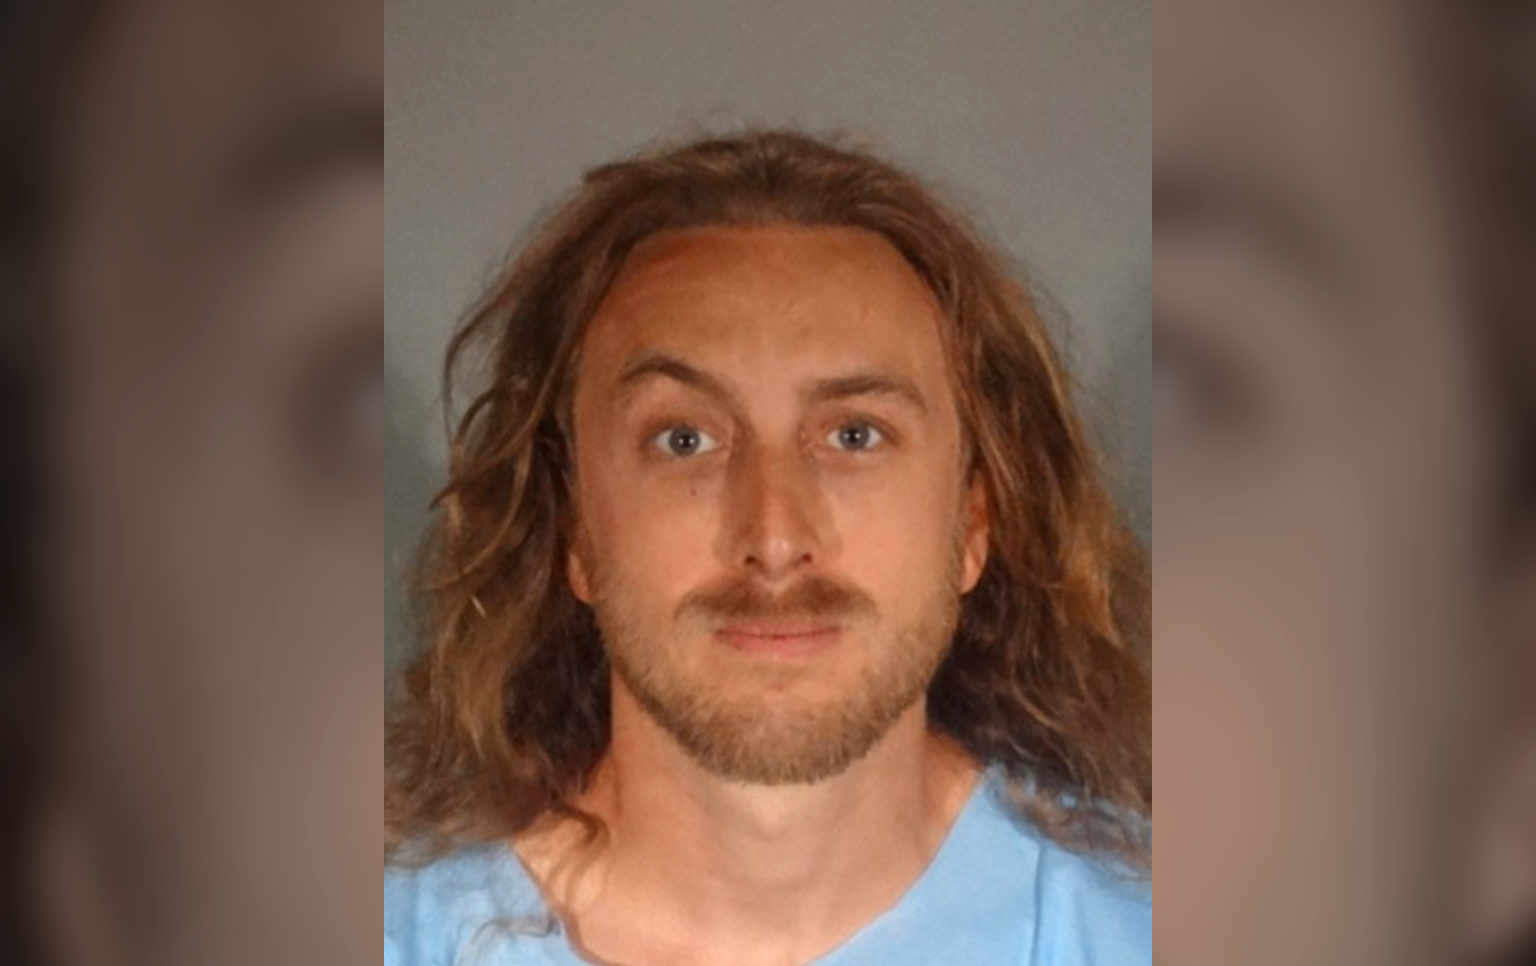 David Dempsey mugshot from 2019 California arrest – Source: Santa Monica Daily Press